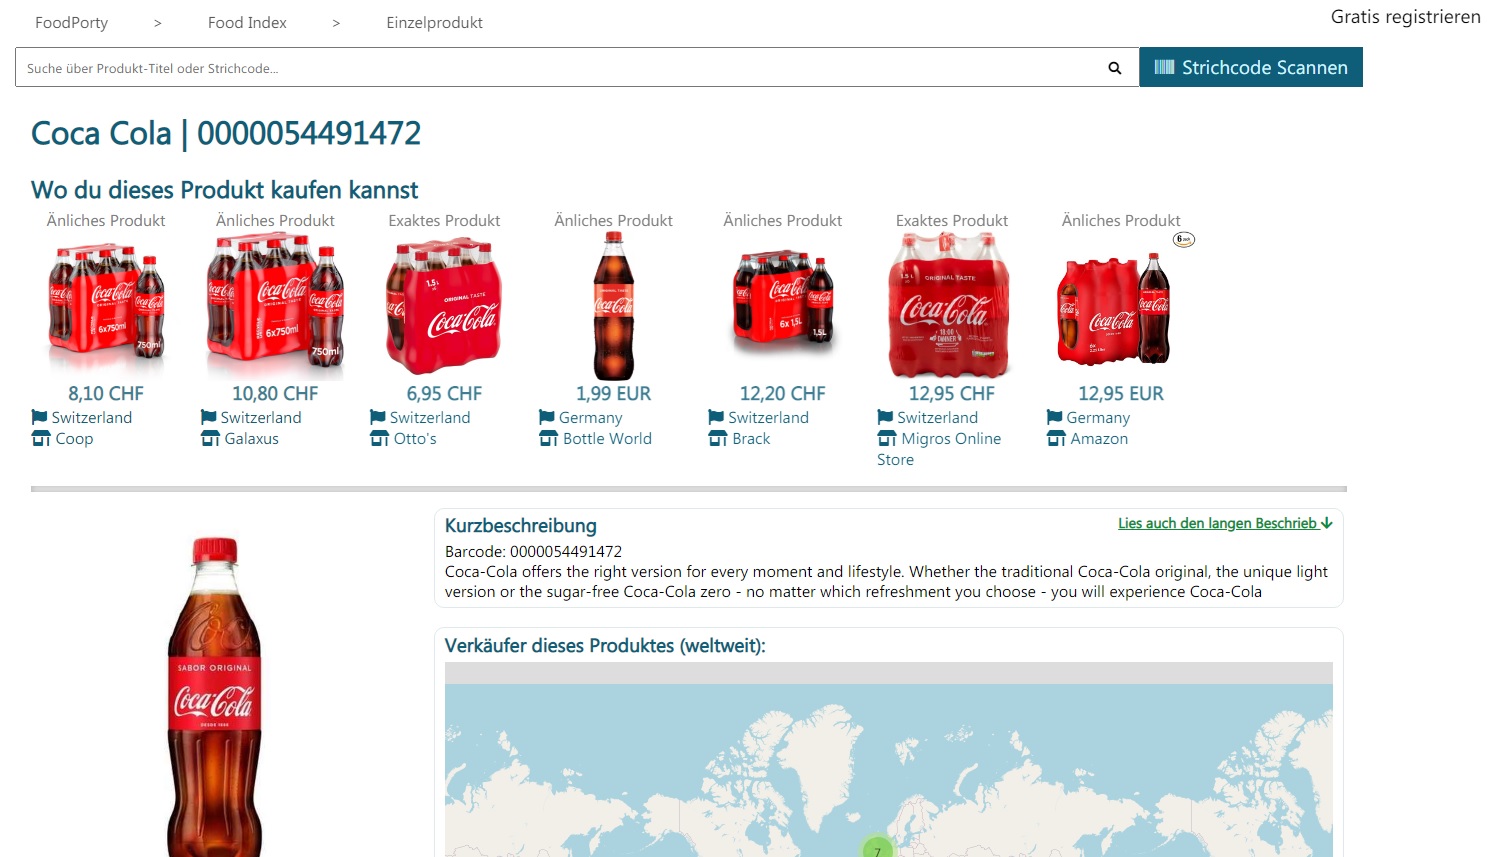 Coca Cola Angebote aus dem FoodPorty Index